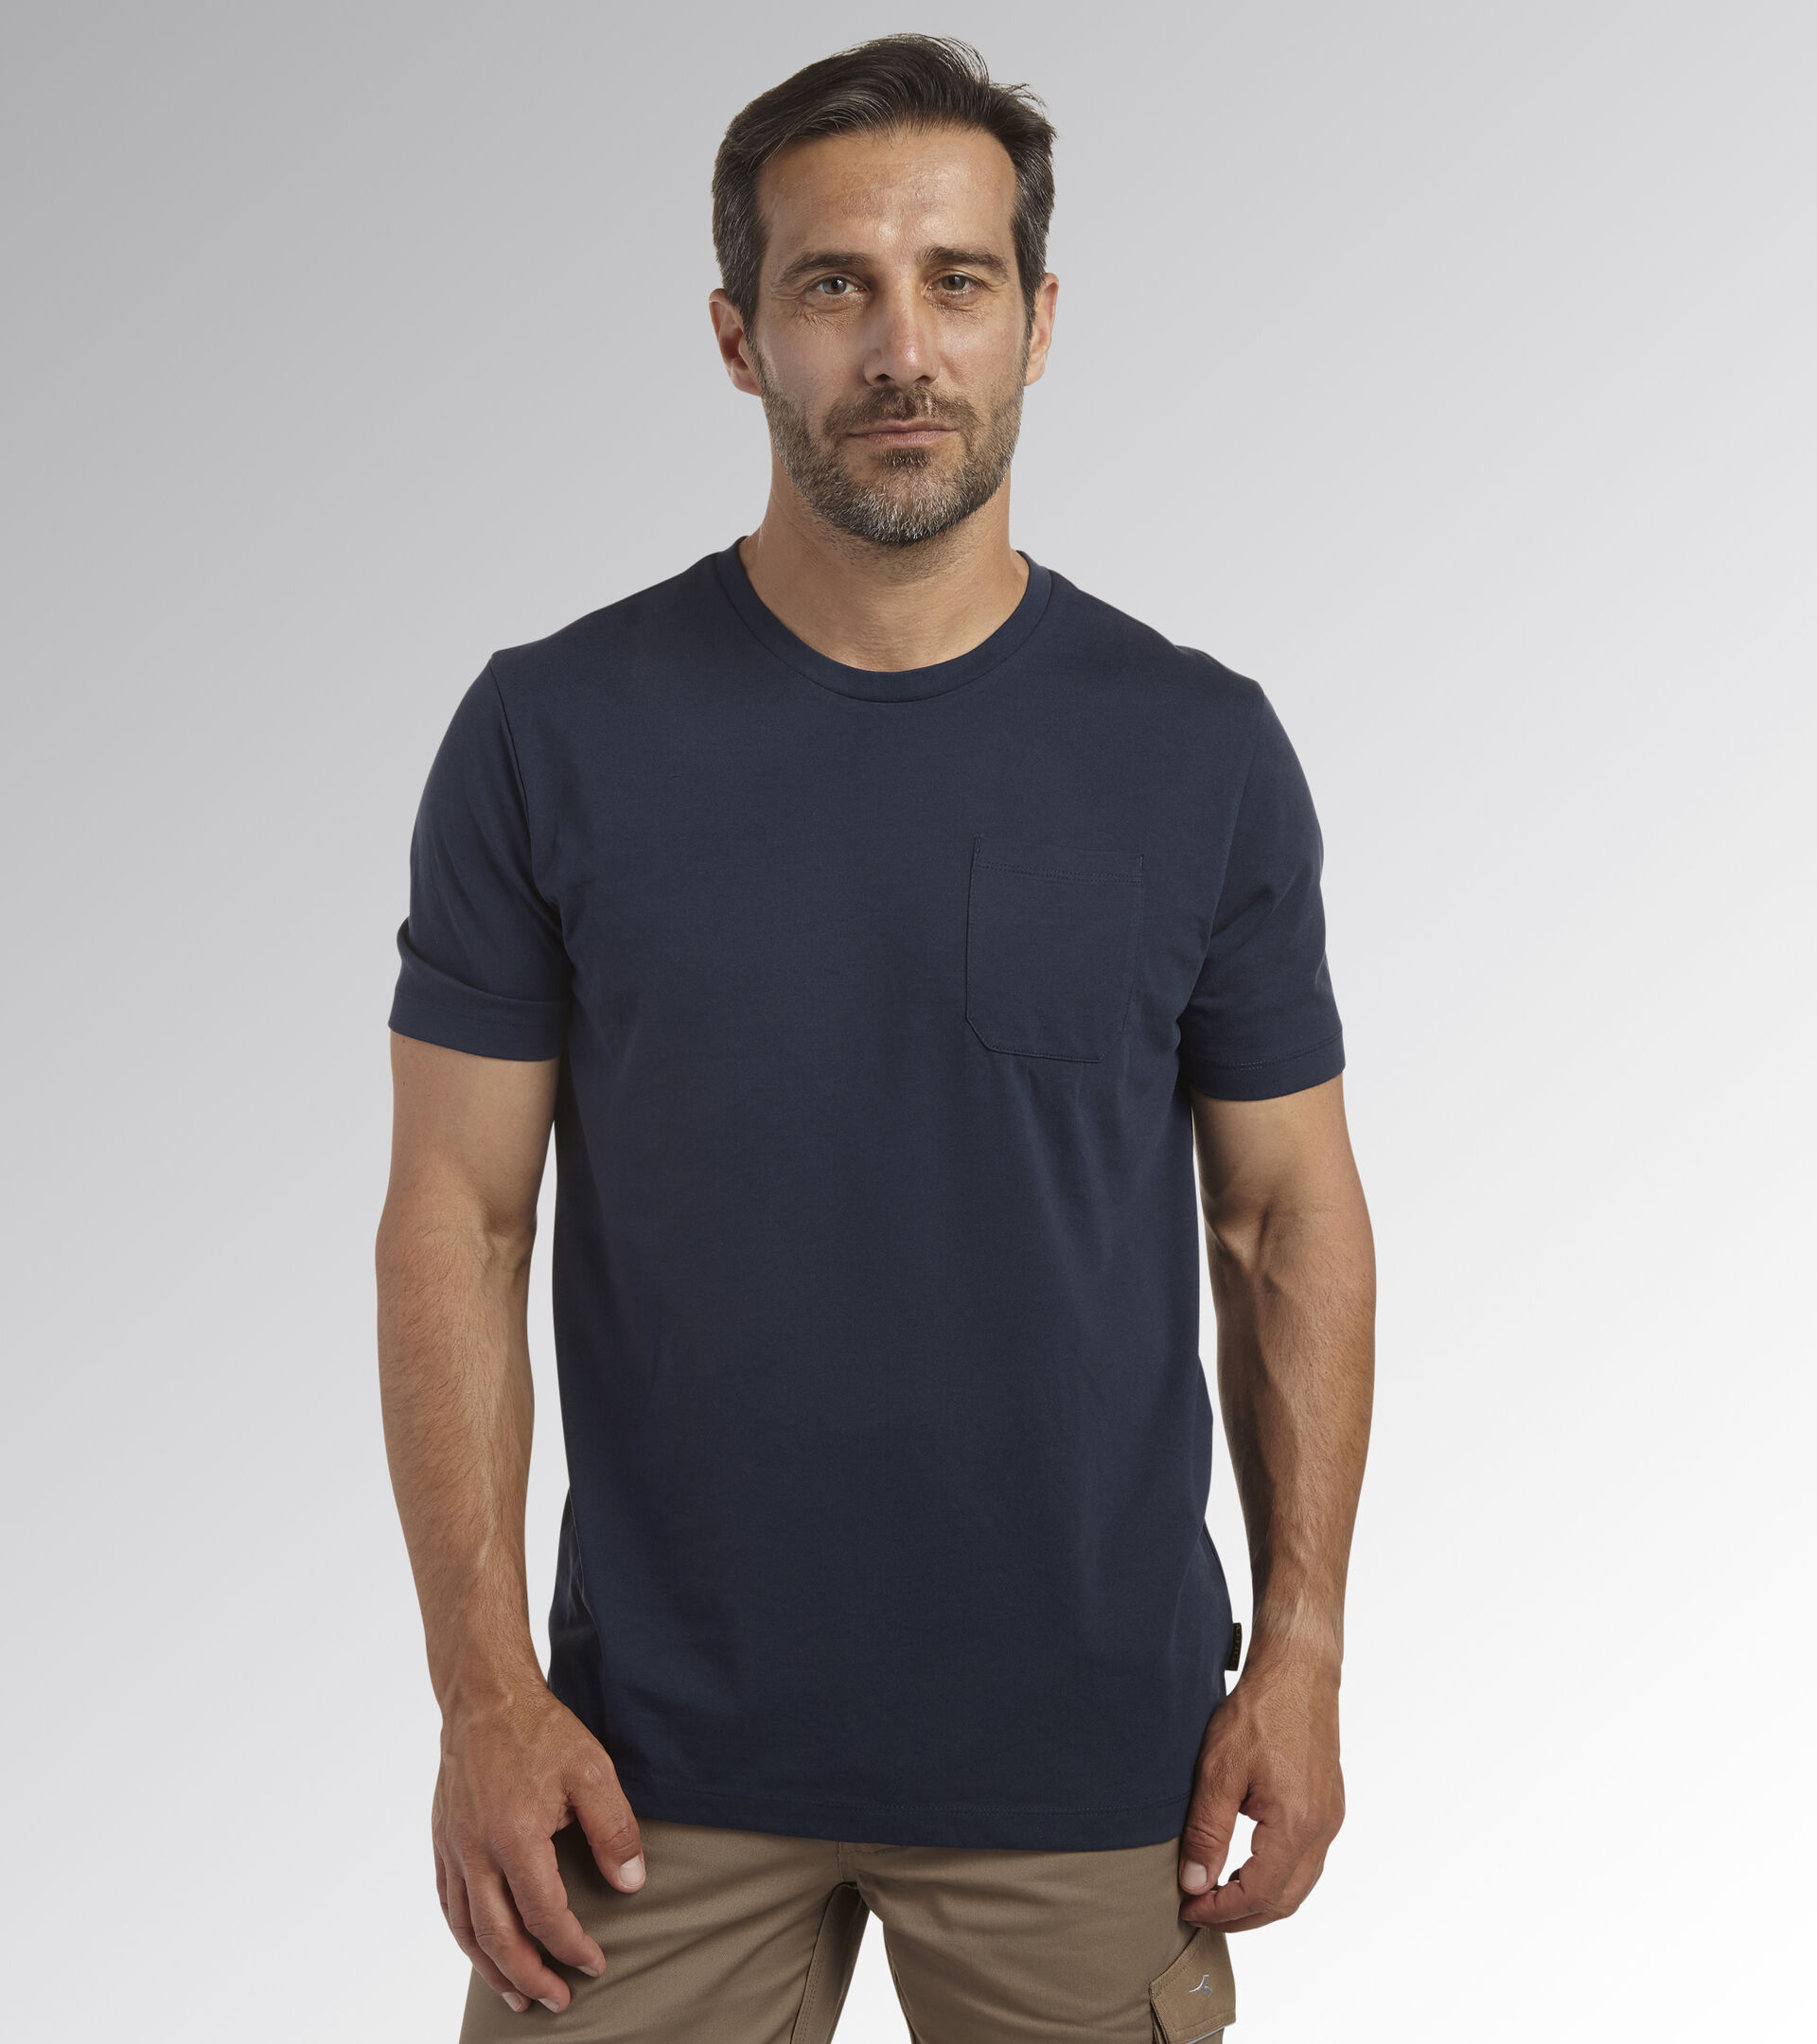 Work T-shirt T-SHIRT INDUSTRY CLASSIC NAVY - Utility